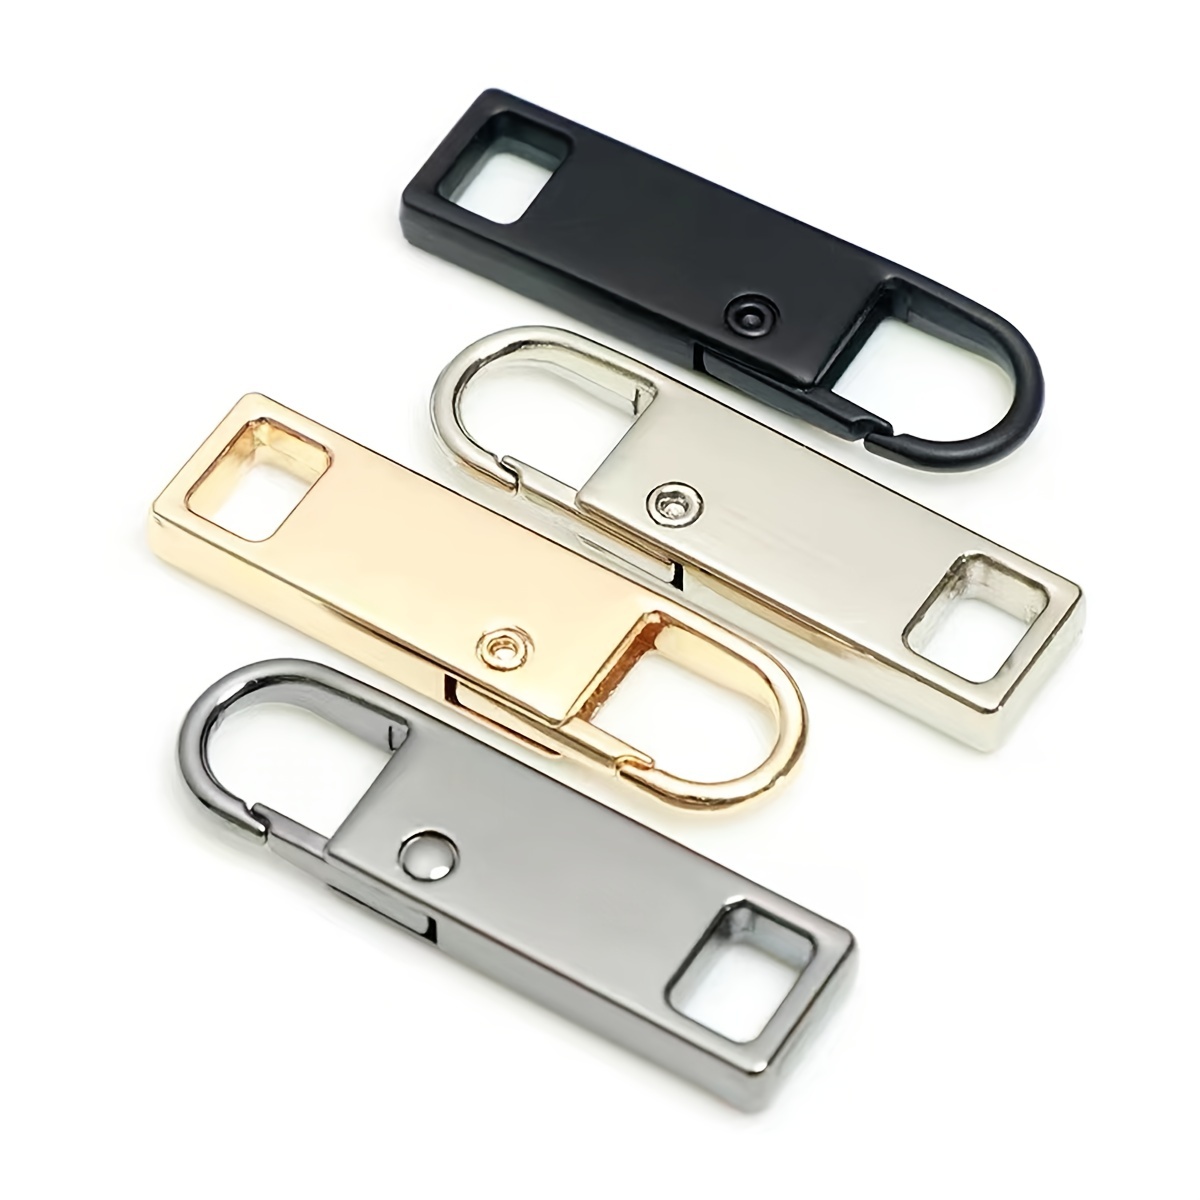 Upgraded Zipper Pull Replacement Metal Zipper Handle Mend Fixer